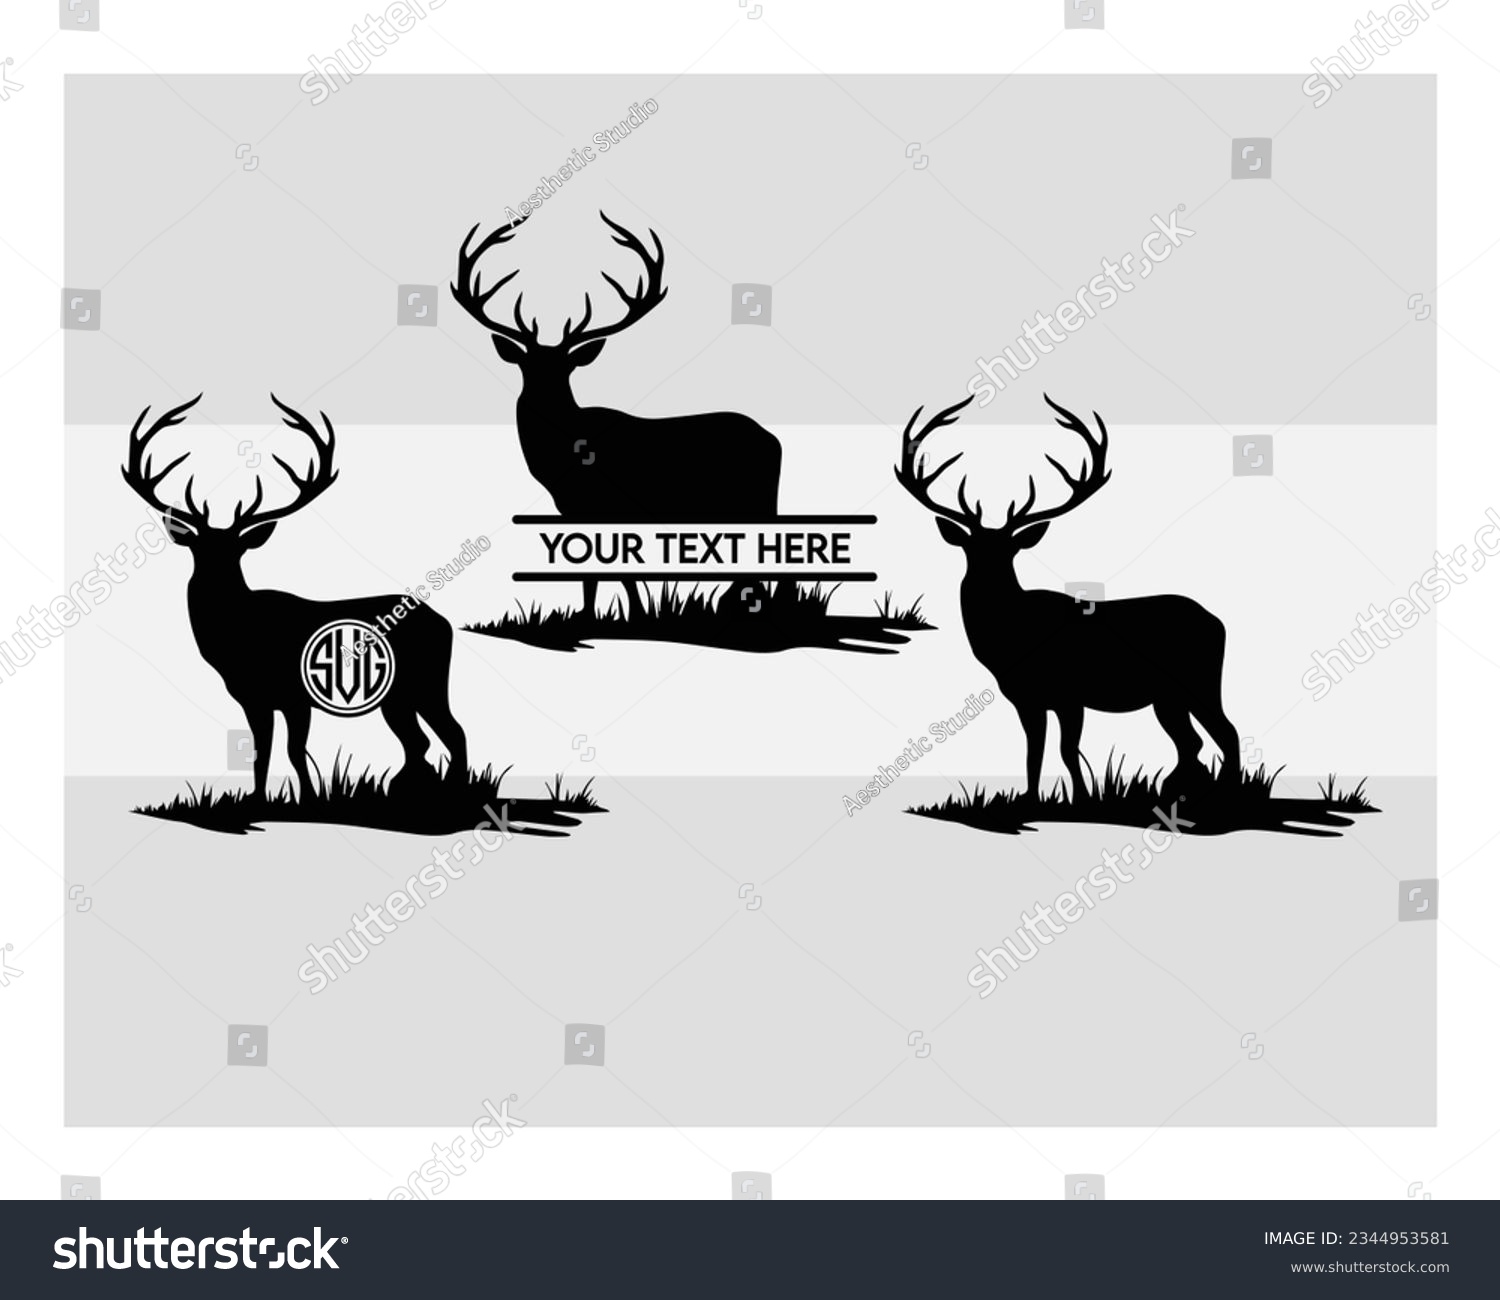 SVG of Deer Svg, SVG Bundle, Nature Deer Svg, Deer Silhouette, Animals Svg, Circut Cut Files Silhouette, Deer Clipart, Silhouette, Vcetor, Outline, Eps, Cut file svg